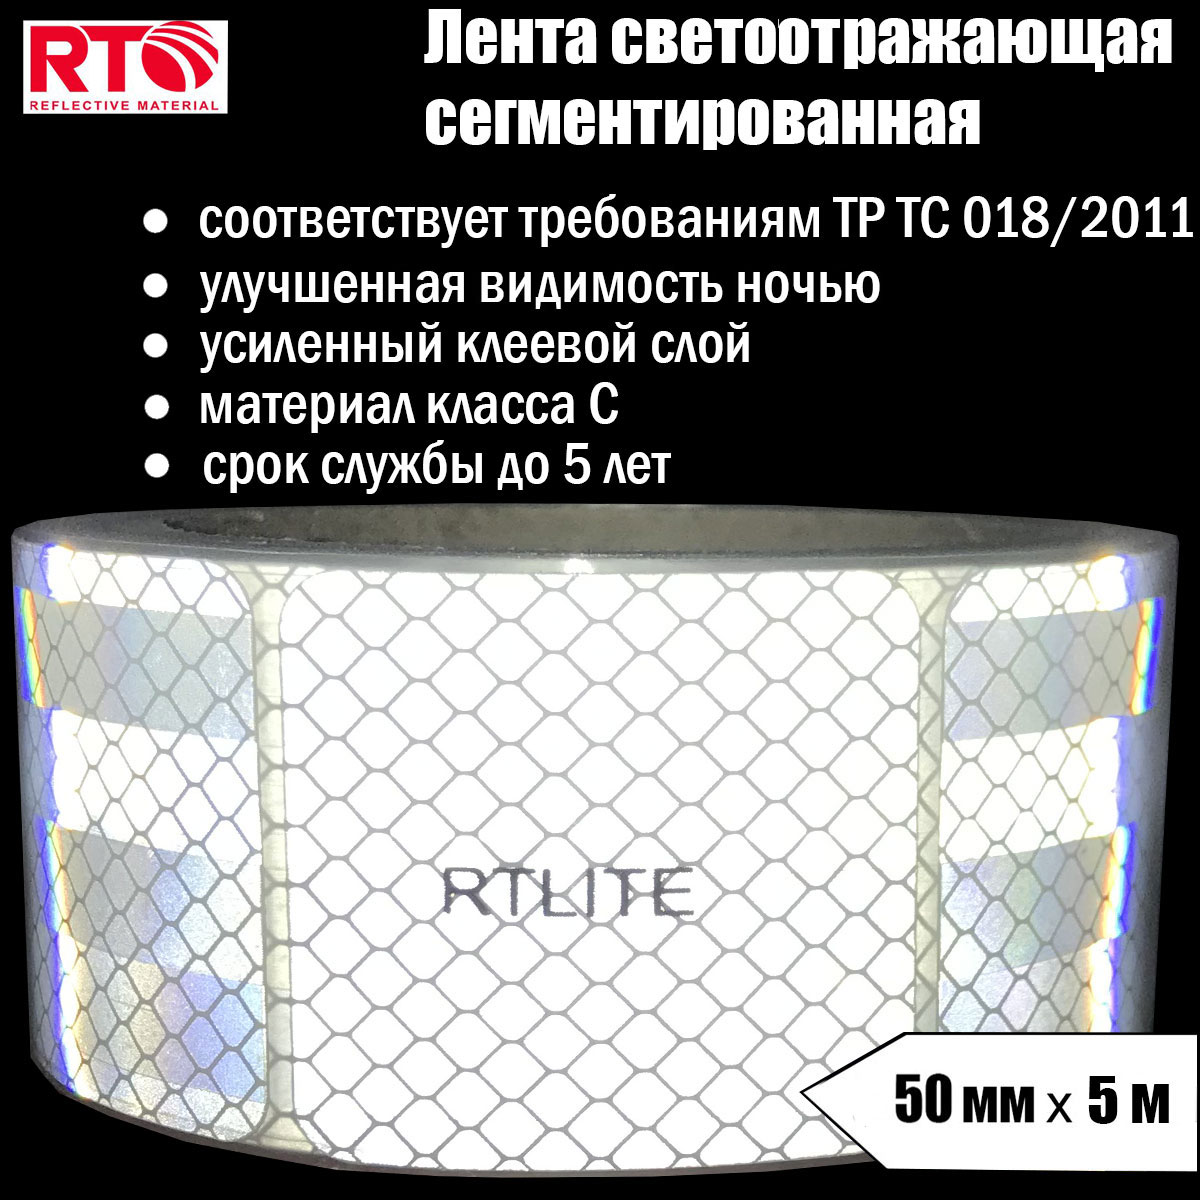 Лента светоотражающая сегментированная RTLITE RT-V104 для контурной маркировки, 50мм х 5м лента светоотражающая для контурной маркировки rtlite rt v104 50 8 мм х 10 м желтая